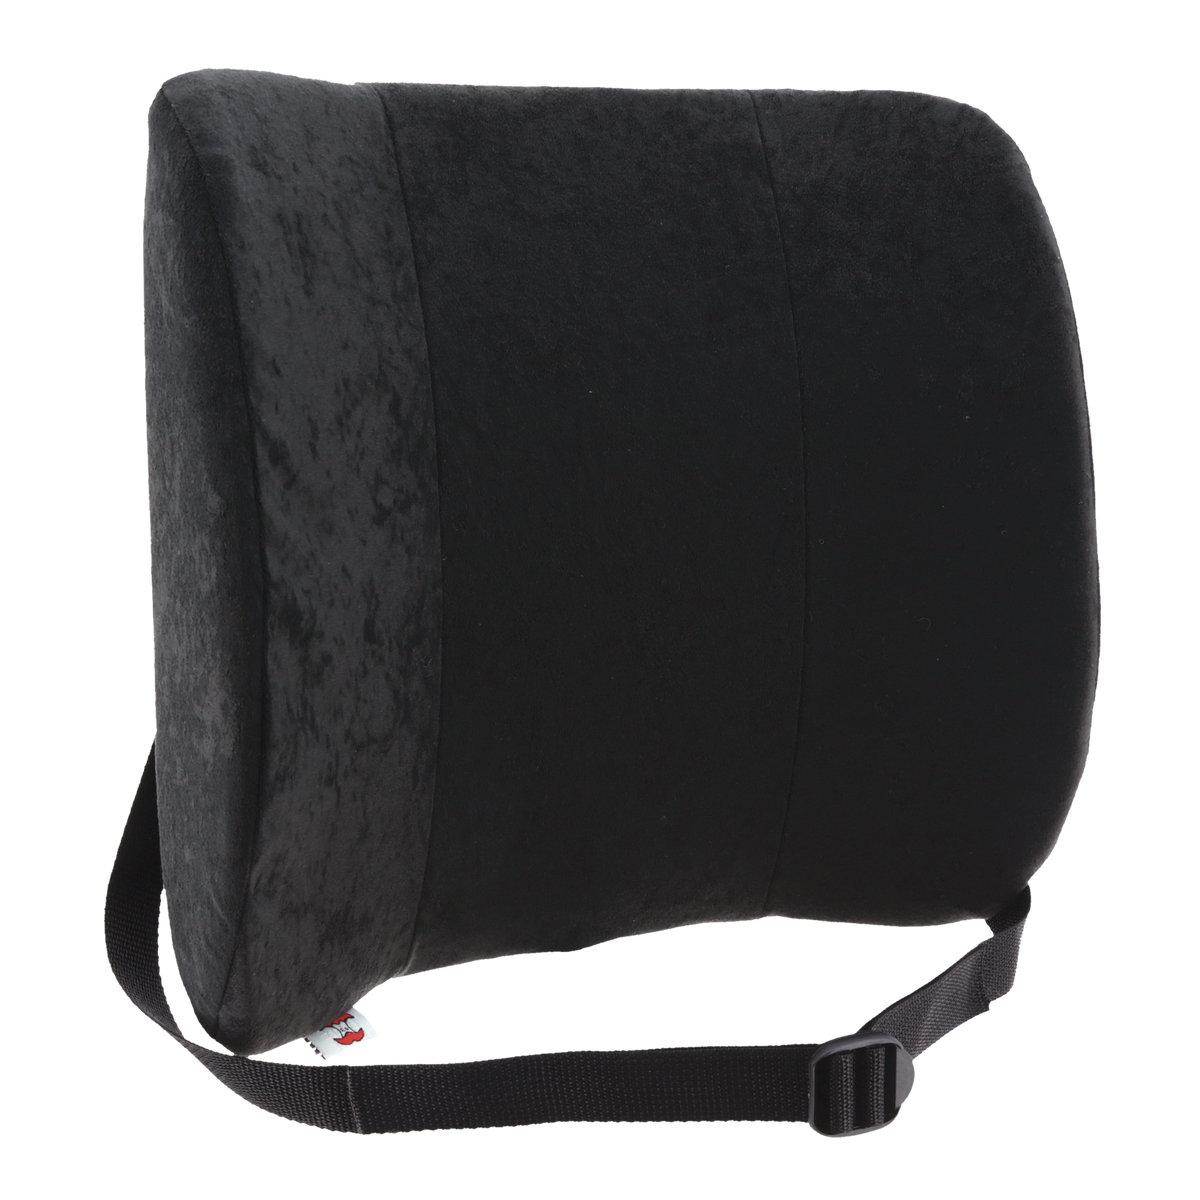 Bucketseat Sitback Rest Deluxe Lumbar Support